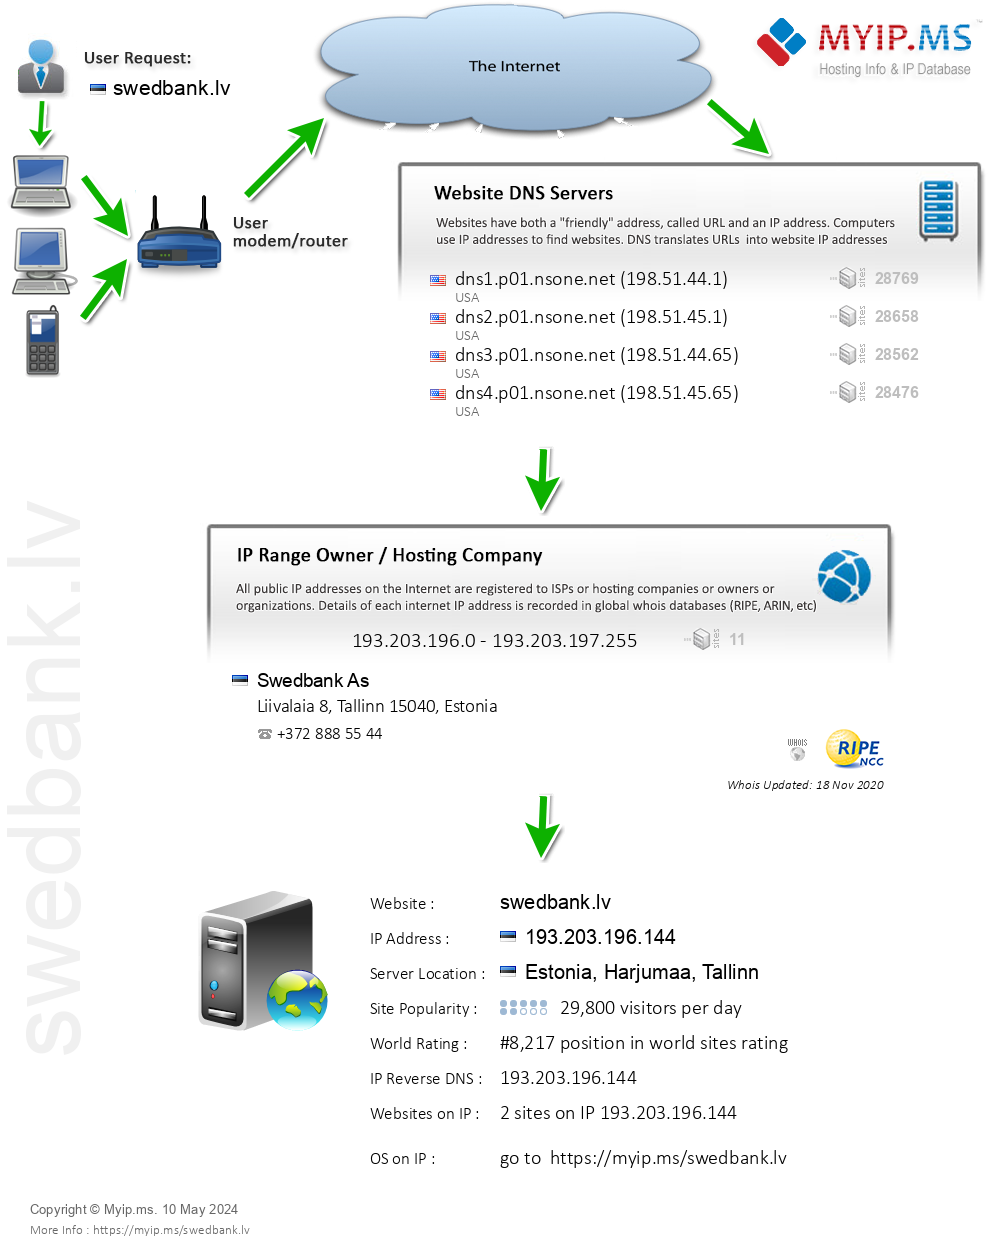 Swedbank.lv - Website Hosting Visual IP Diagram